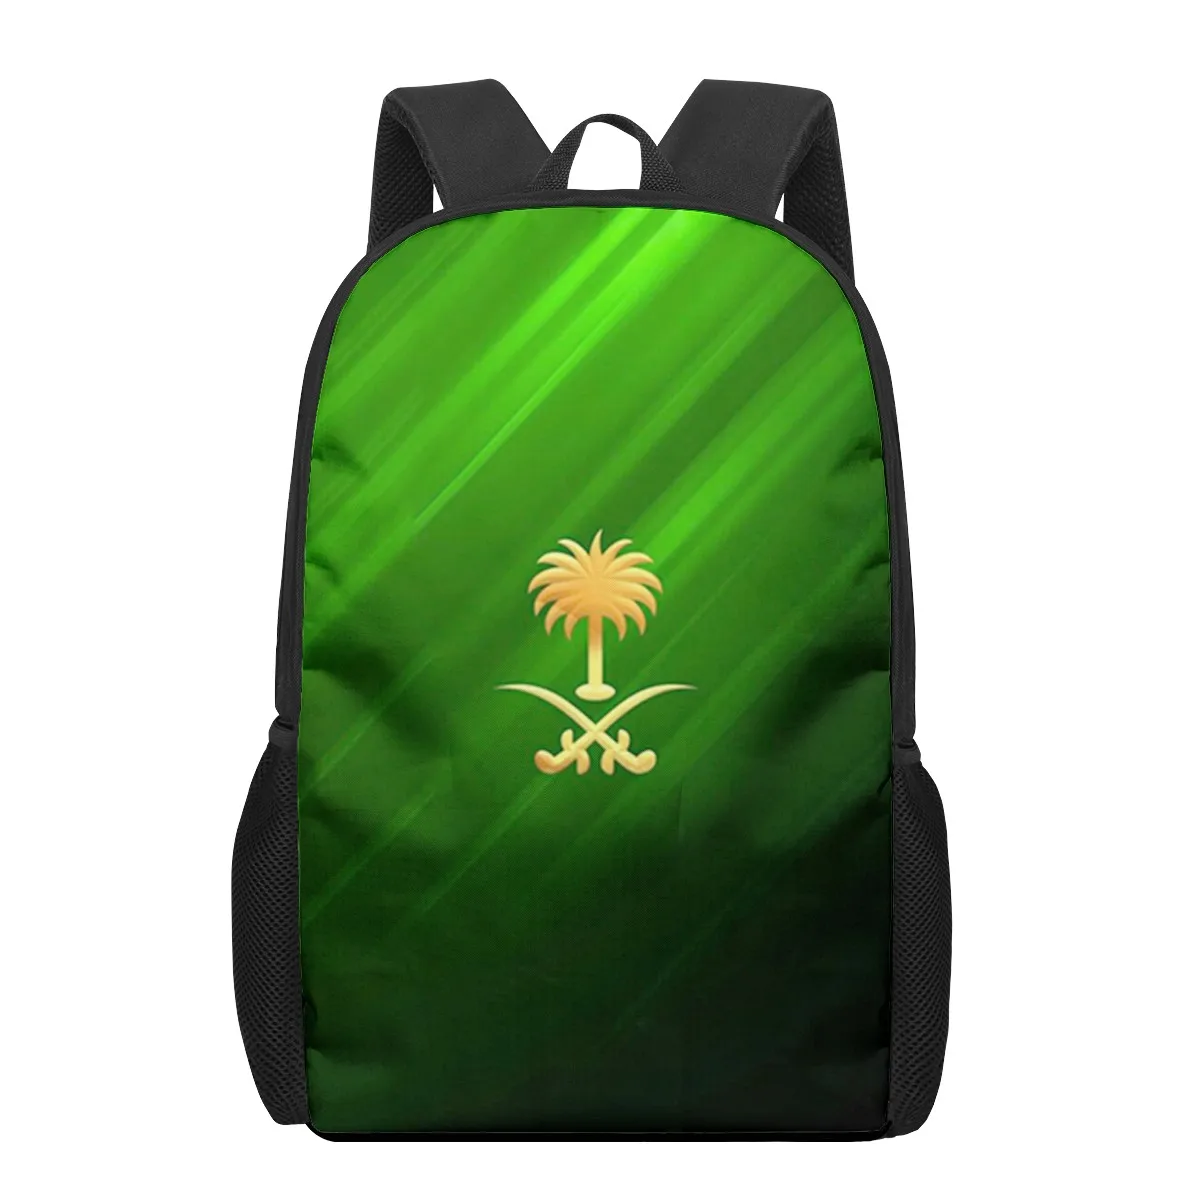 Kingdom Of Saudi Arabia Flag 3D Print School Backpack for Boys Girls Teenager Kids Book Bag Casual Shoulder Bags 16Inch enlarge